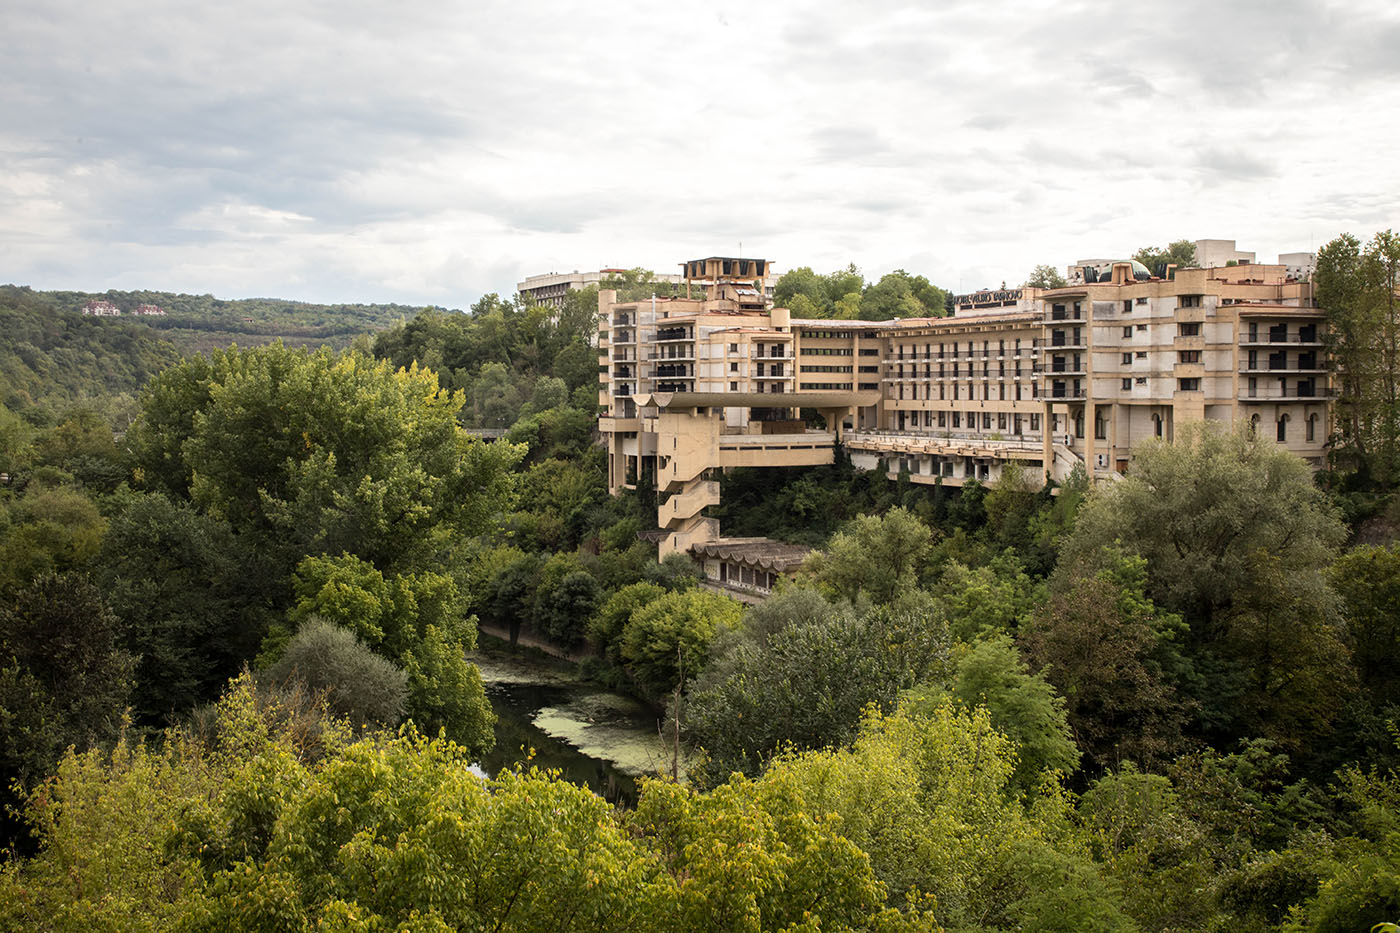 The last photograph I took of Interhotel Veliko Turnovo, in September 2022.